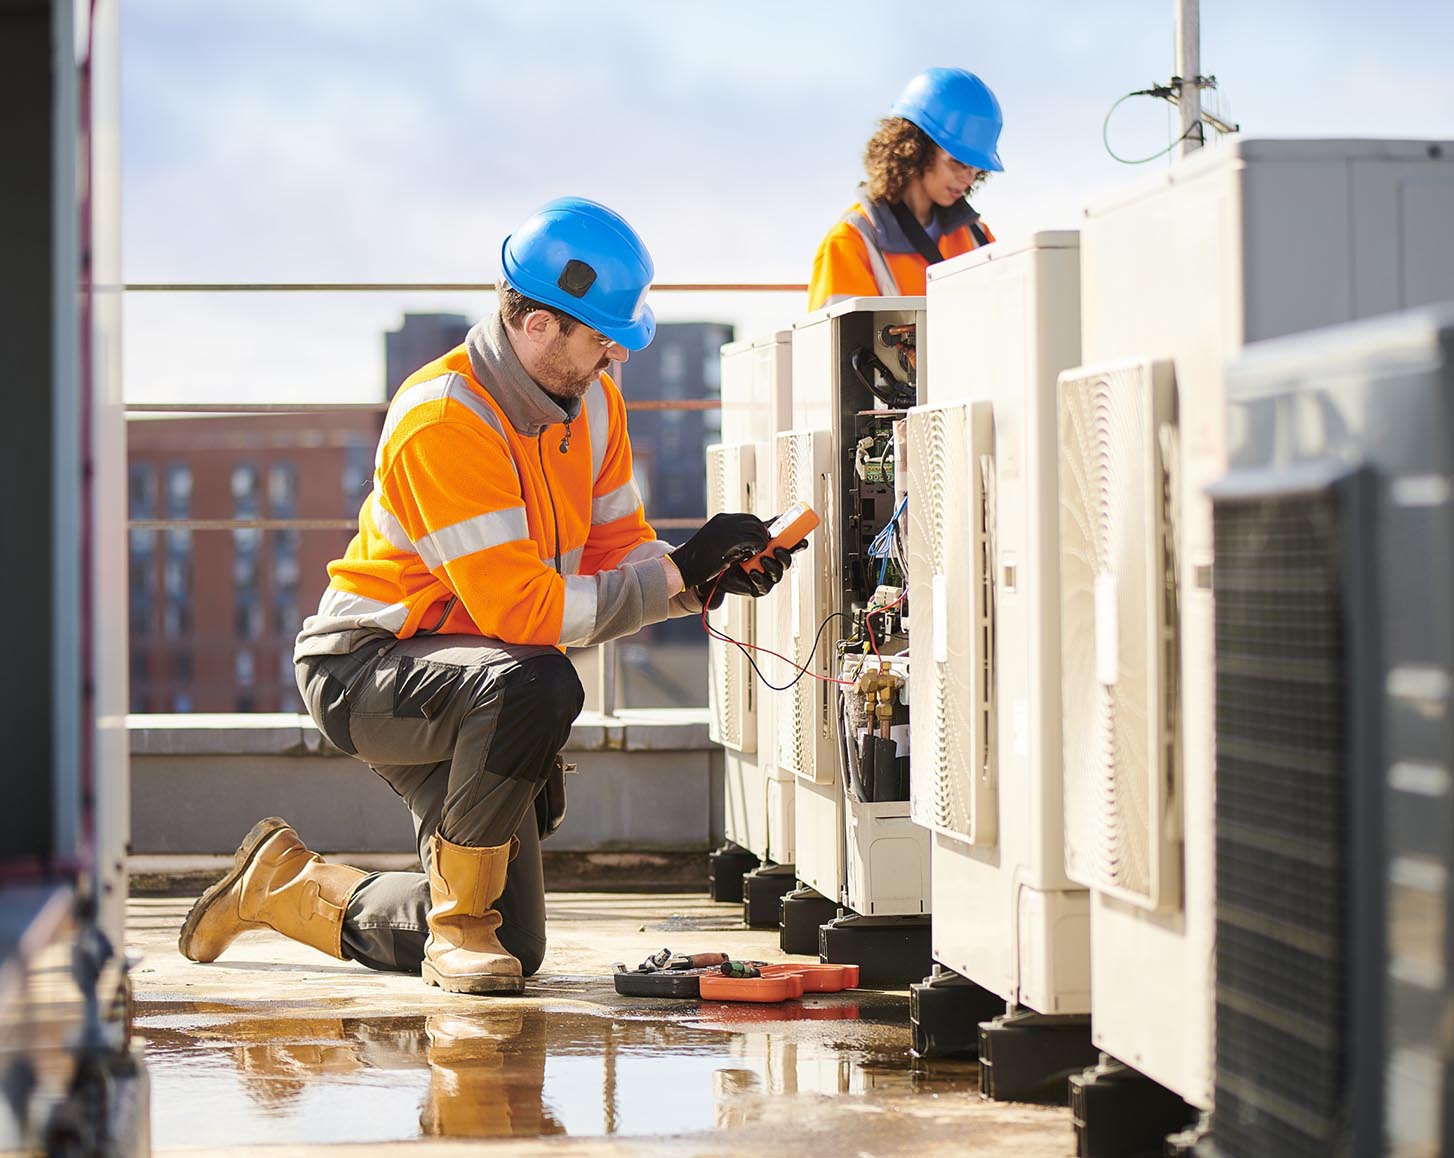 Electricians in hi-vis vests work on HVAC units on top of a building